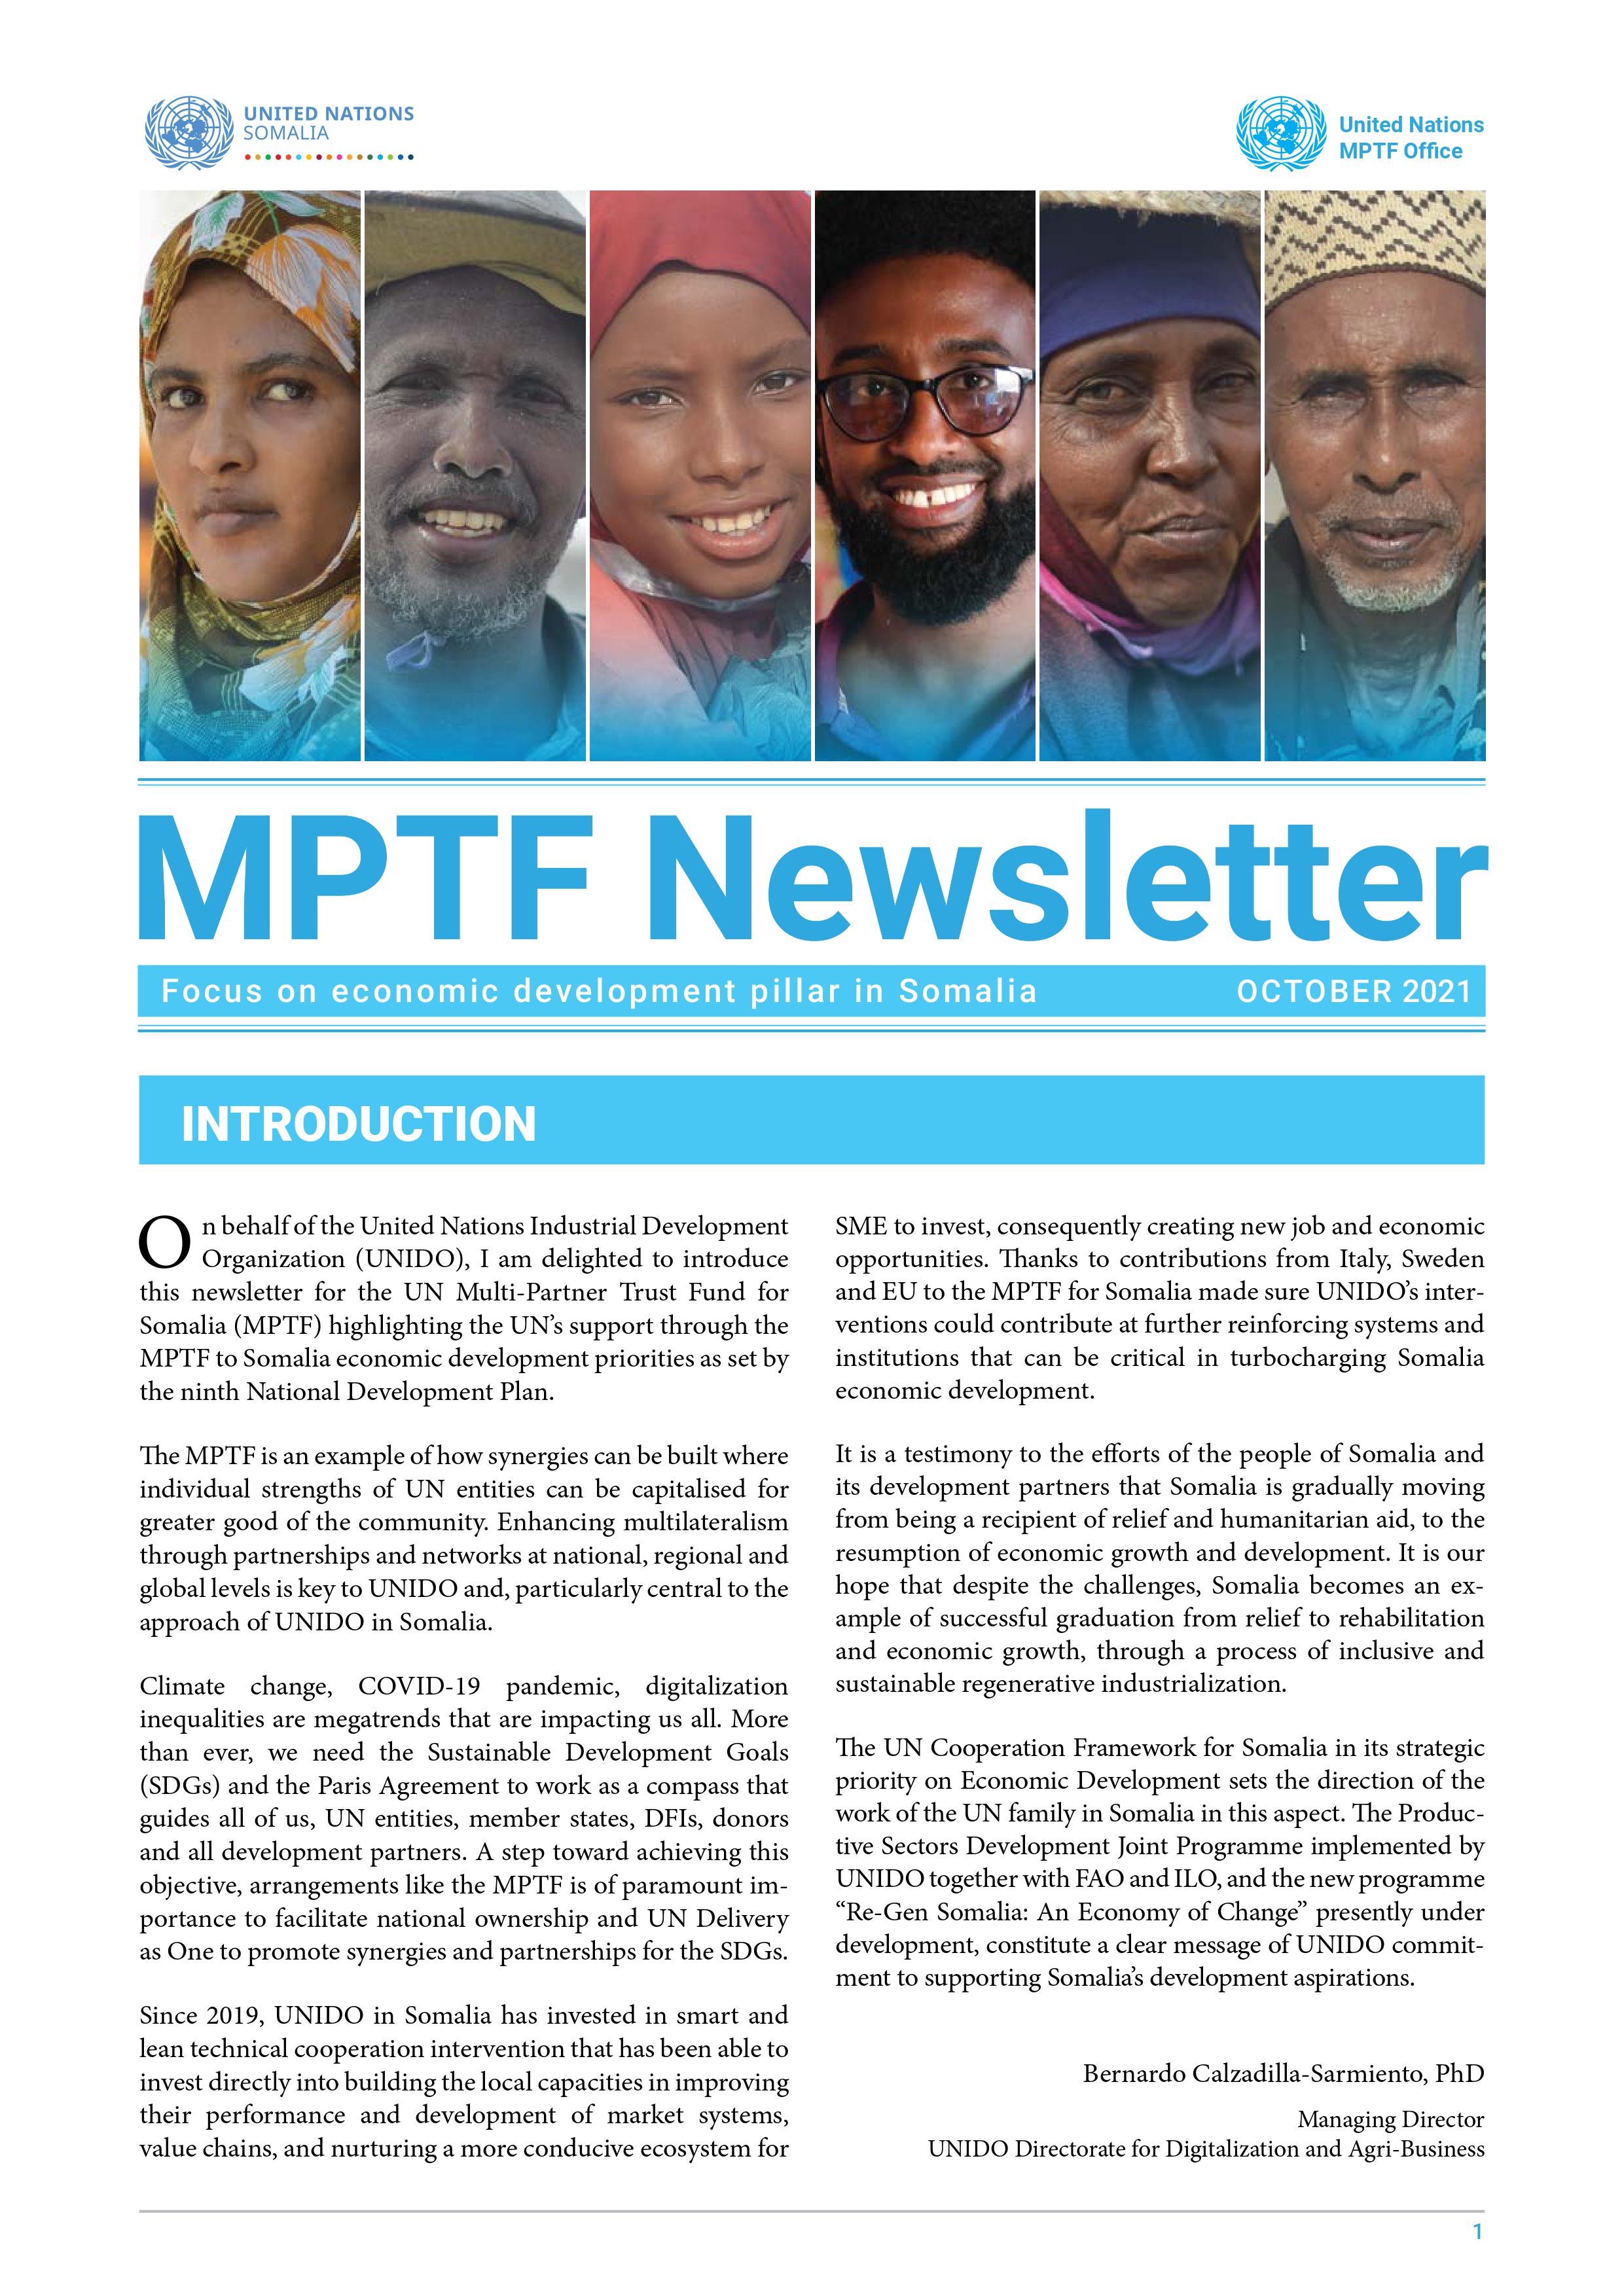 UN MPTF Newsletter, October 2021